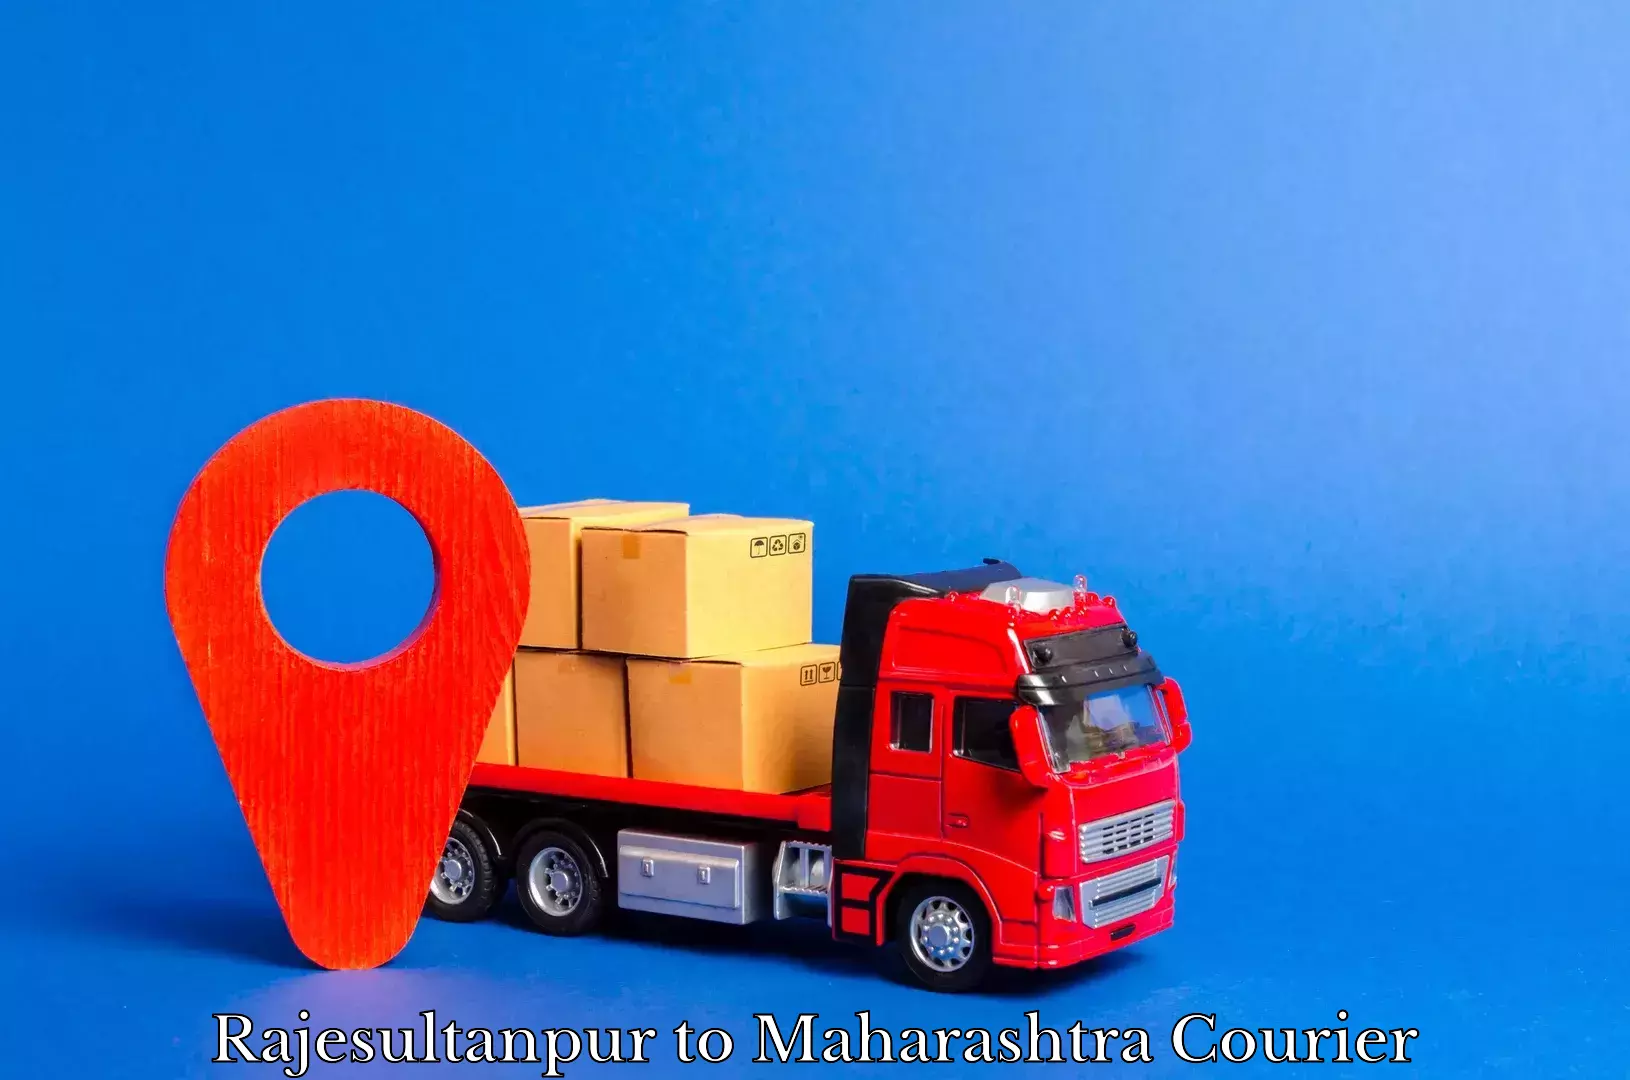 Multi-city courier Rajesultanpur to Maharashtra